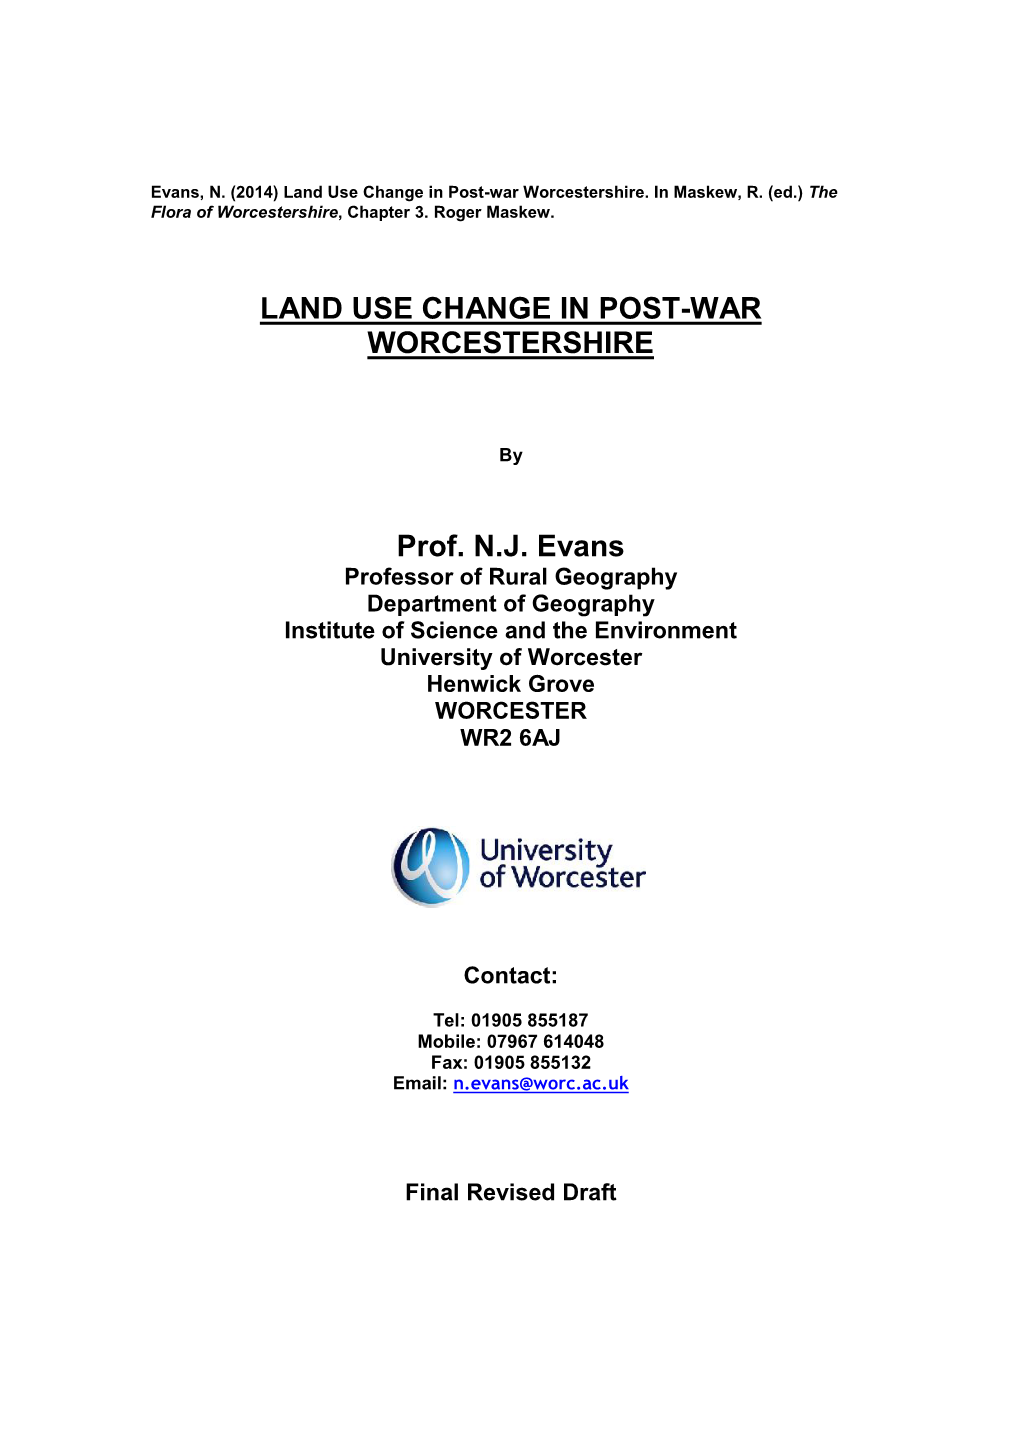 LAND USE CHANGE in POST-WAR WORCESTERSHIRE Prof. N.J. Evans